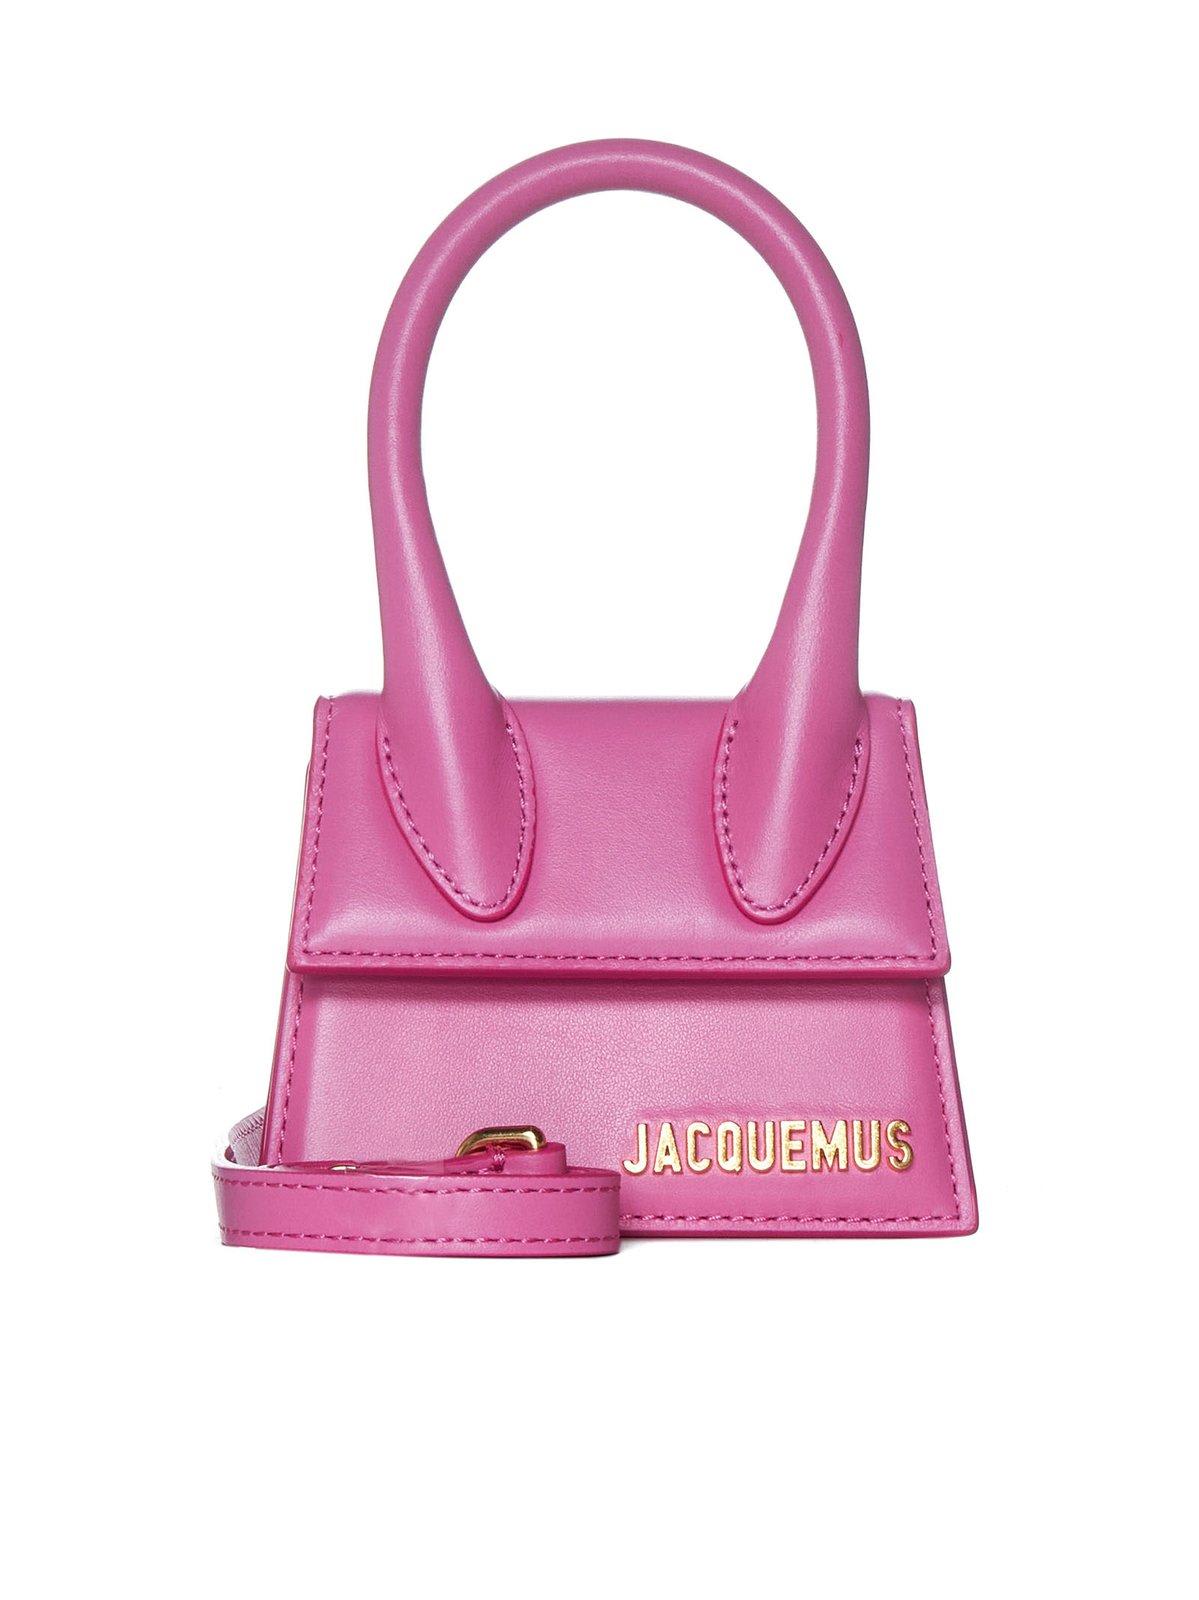 Jacquemus Le Chiquito Mini Tote Bag